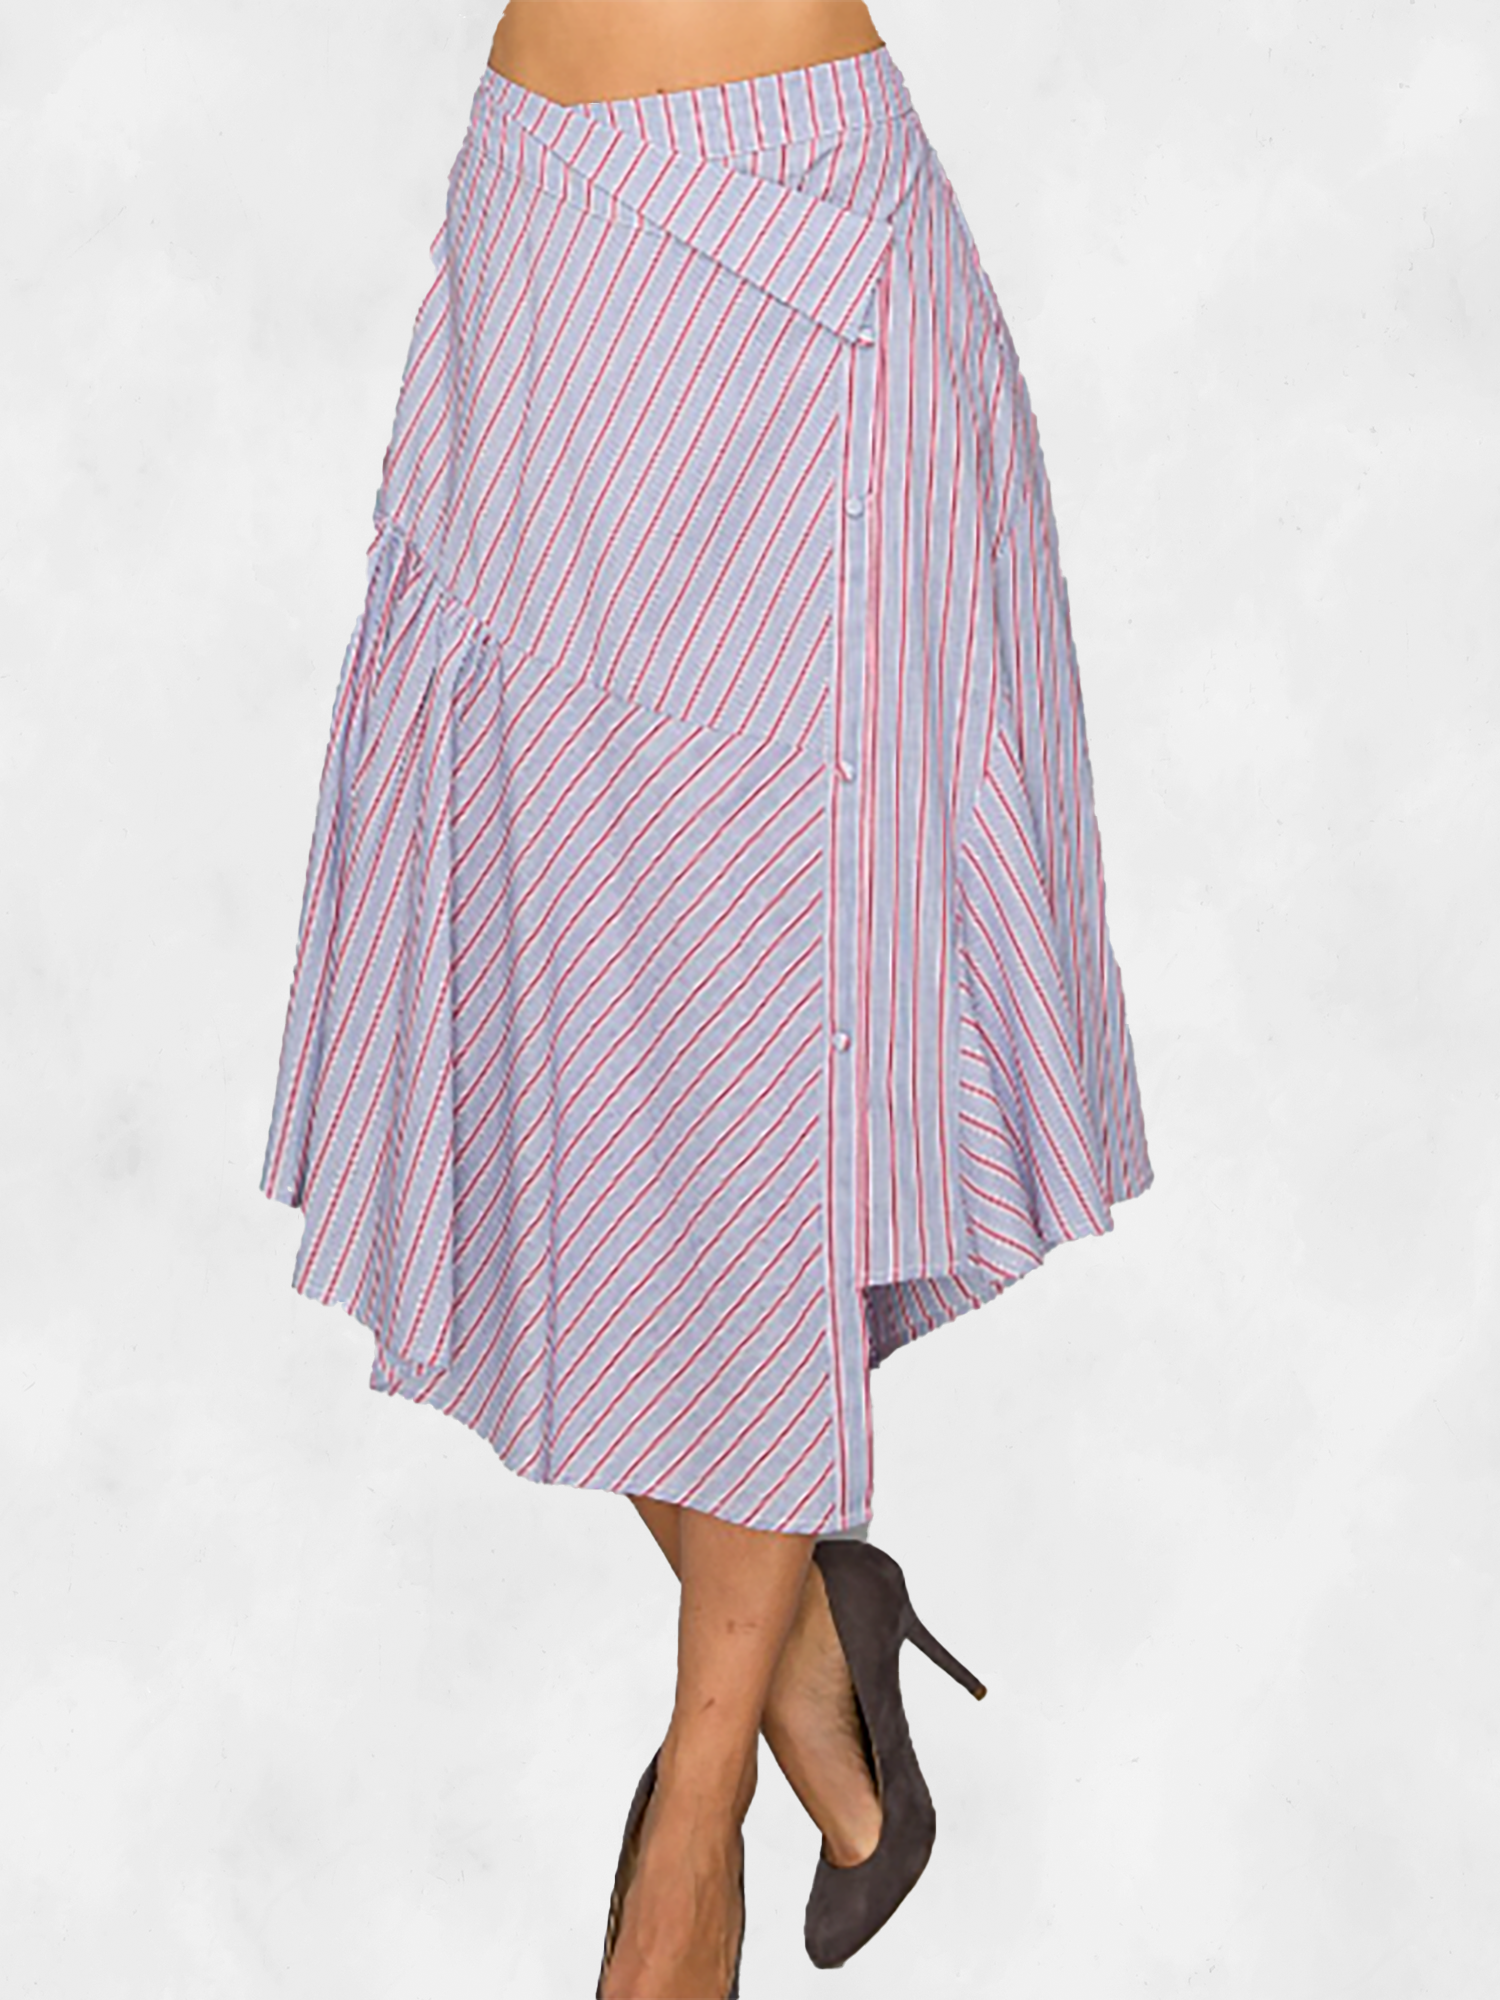 A.Peach Striped Knee Length Midi Skirt